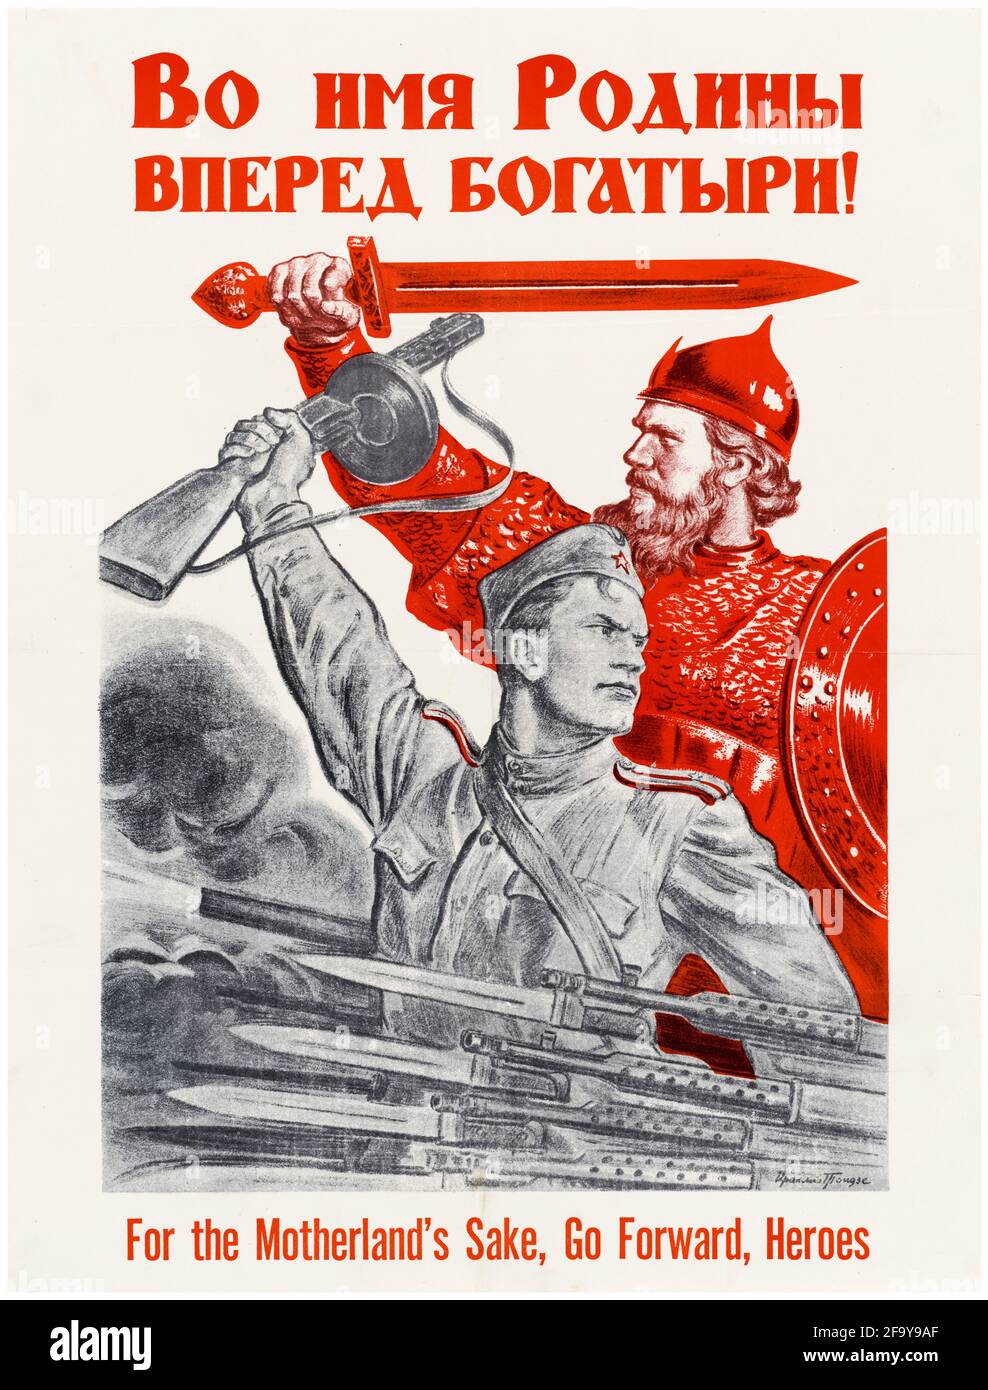 Ruso, póster motivacional de WW2, For the Motherland's Sake Go Forward Heroes, 1942-1945 Foto de stock